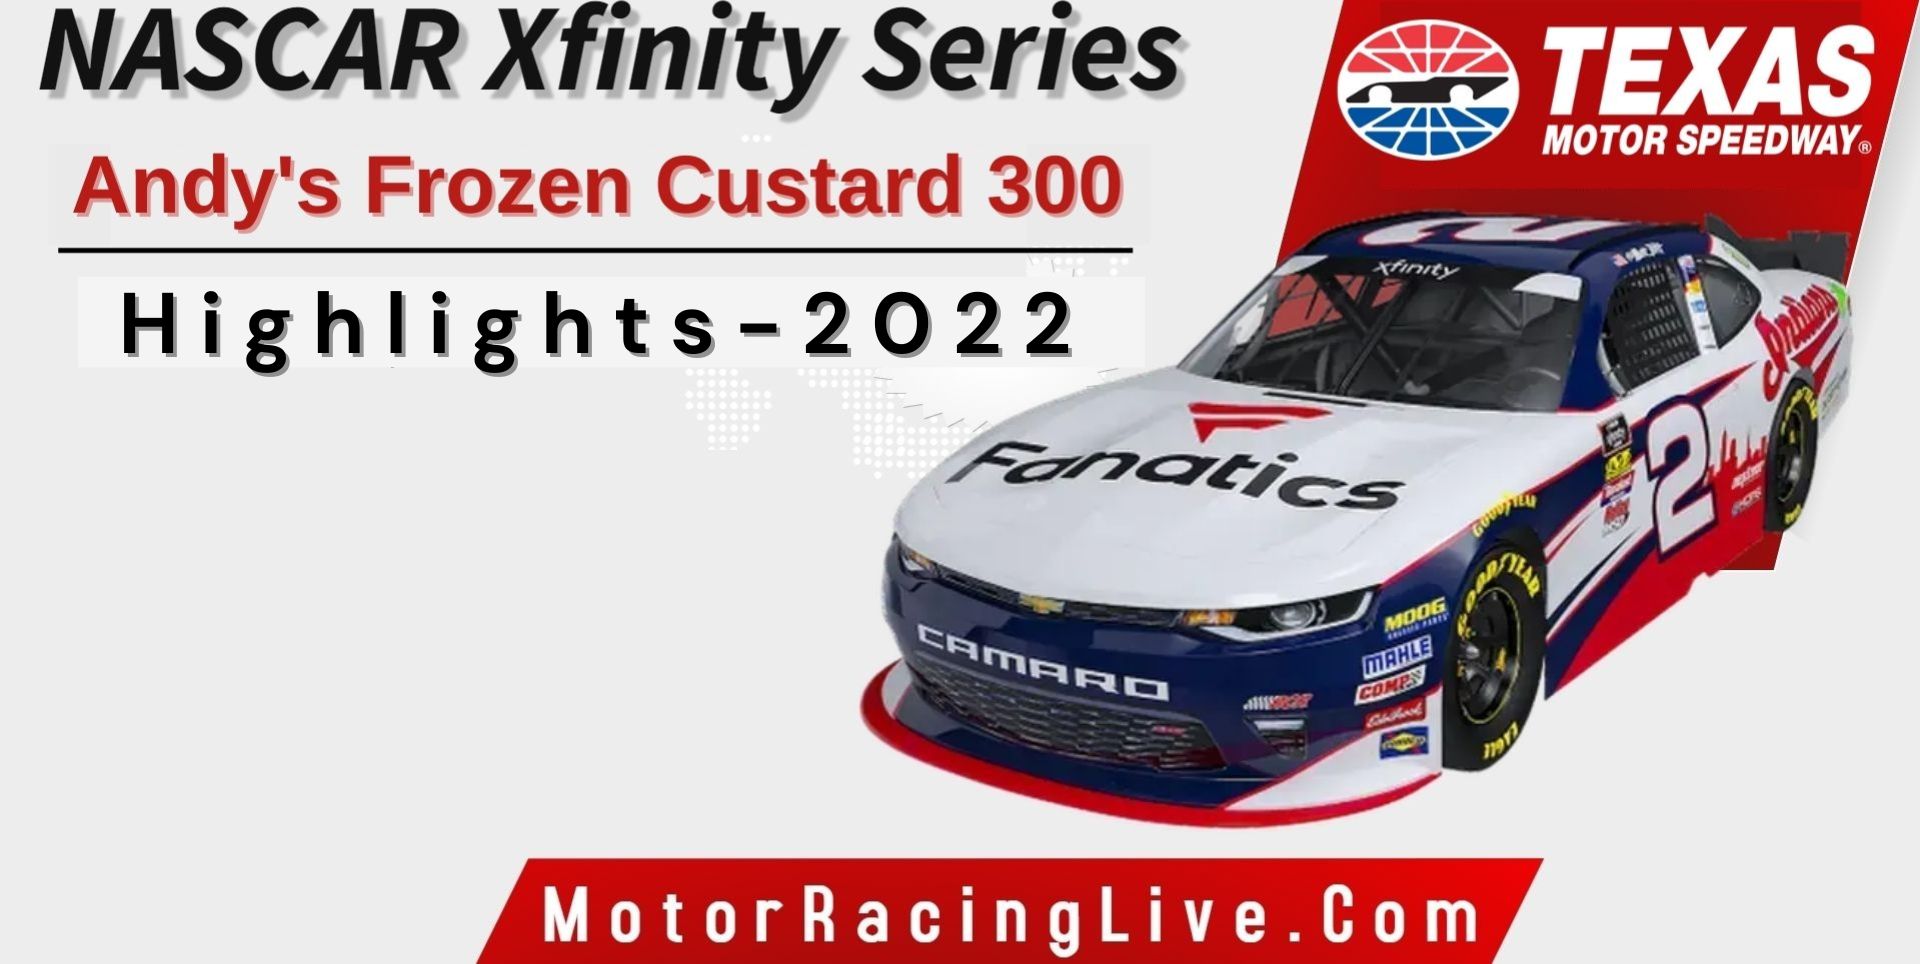 Andys Frozen Custard 300 Highlights 2022 NASCAR Xfinity